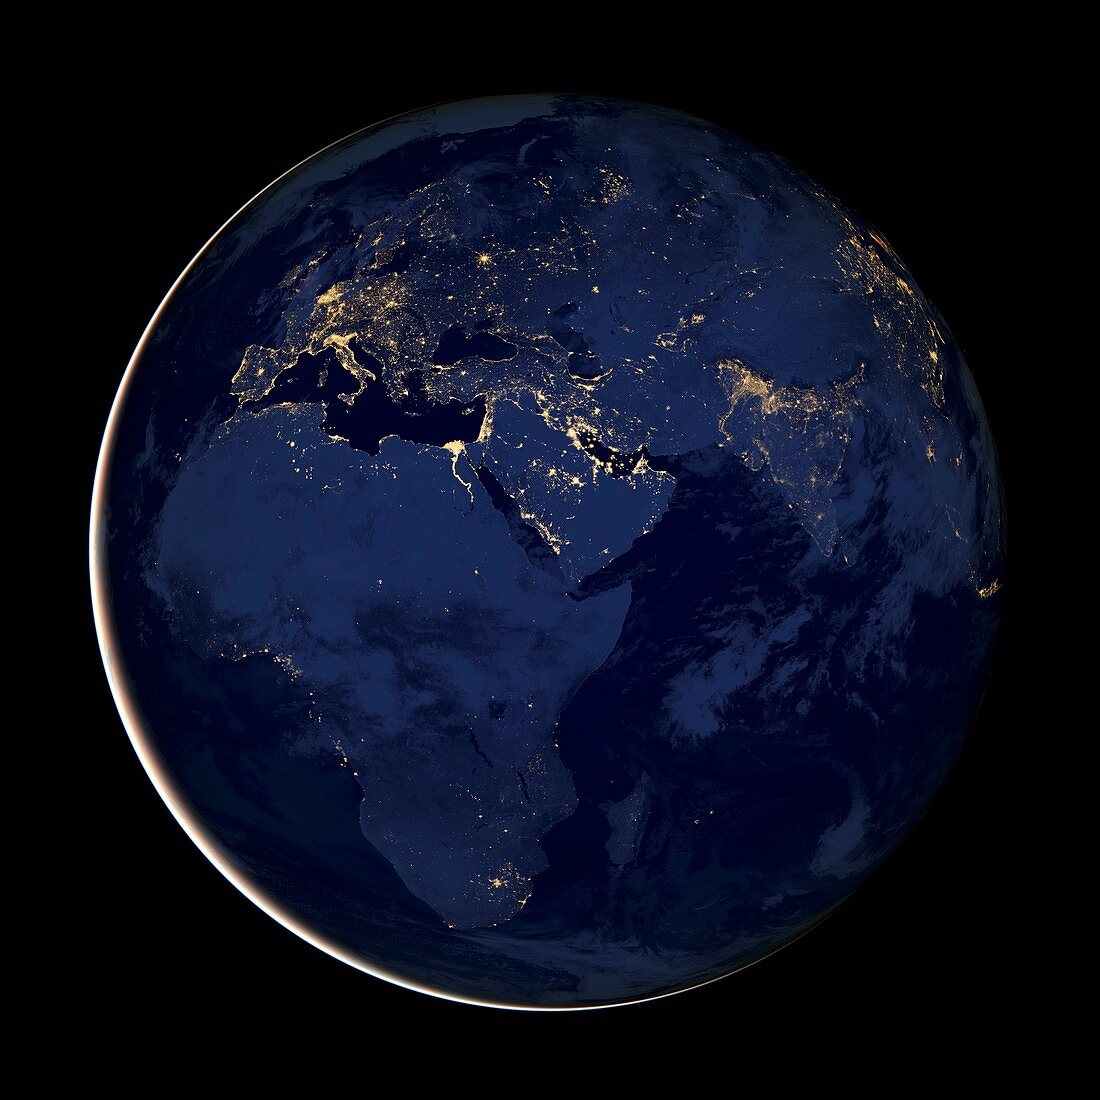 Africa at night,satellite image